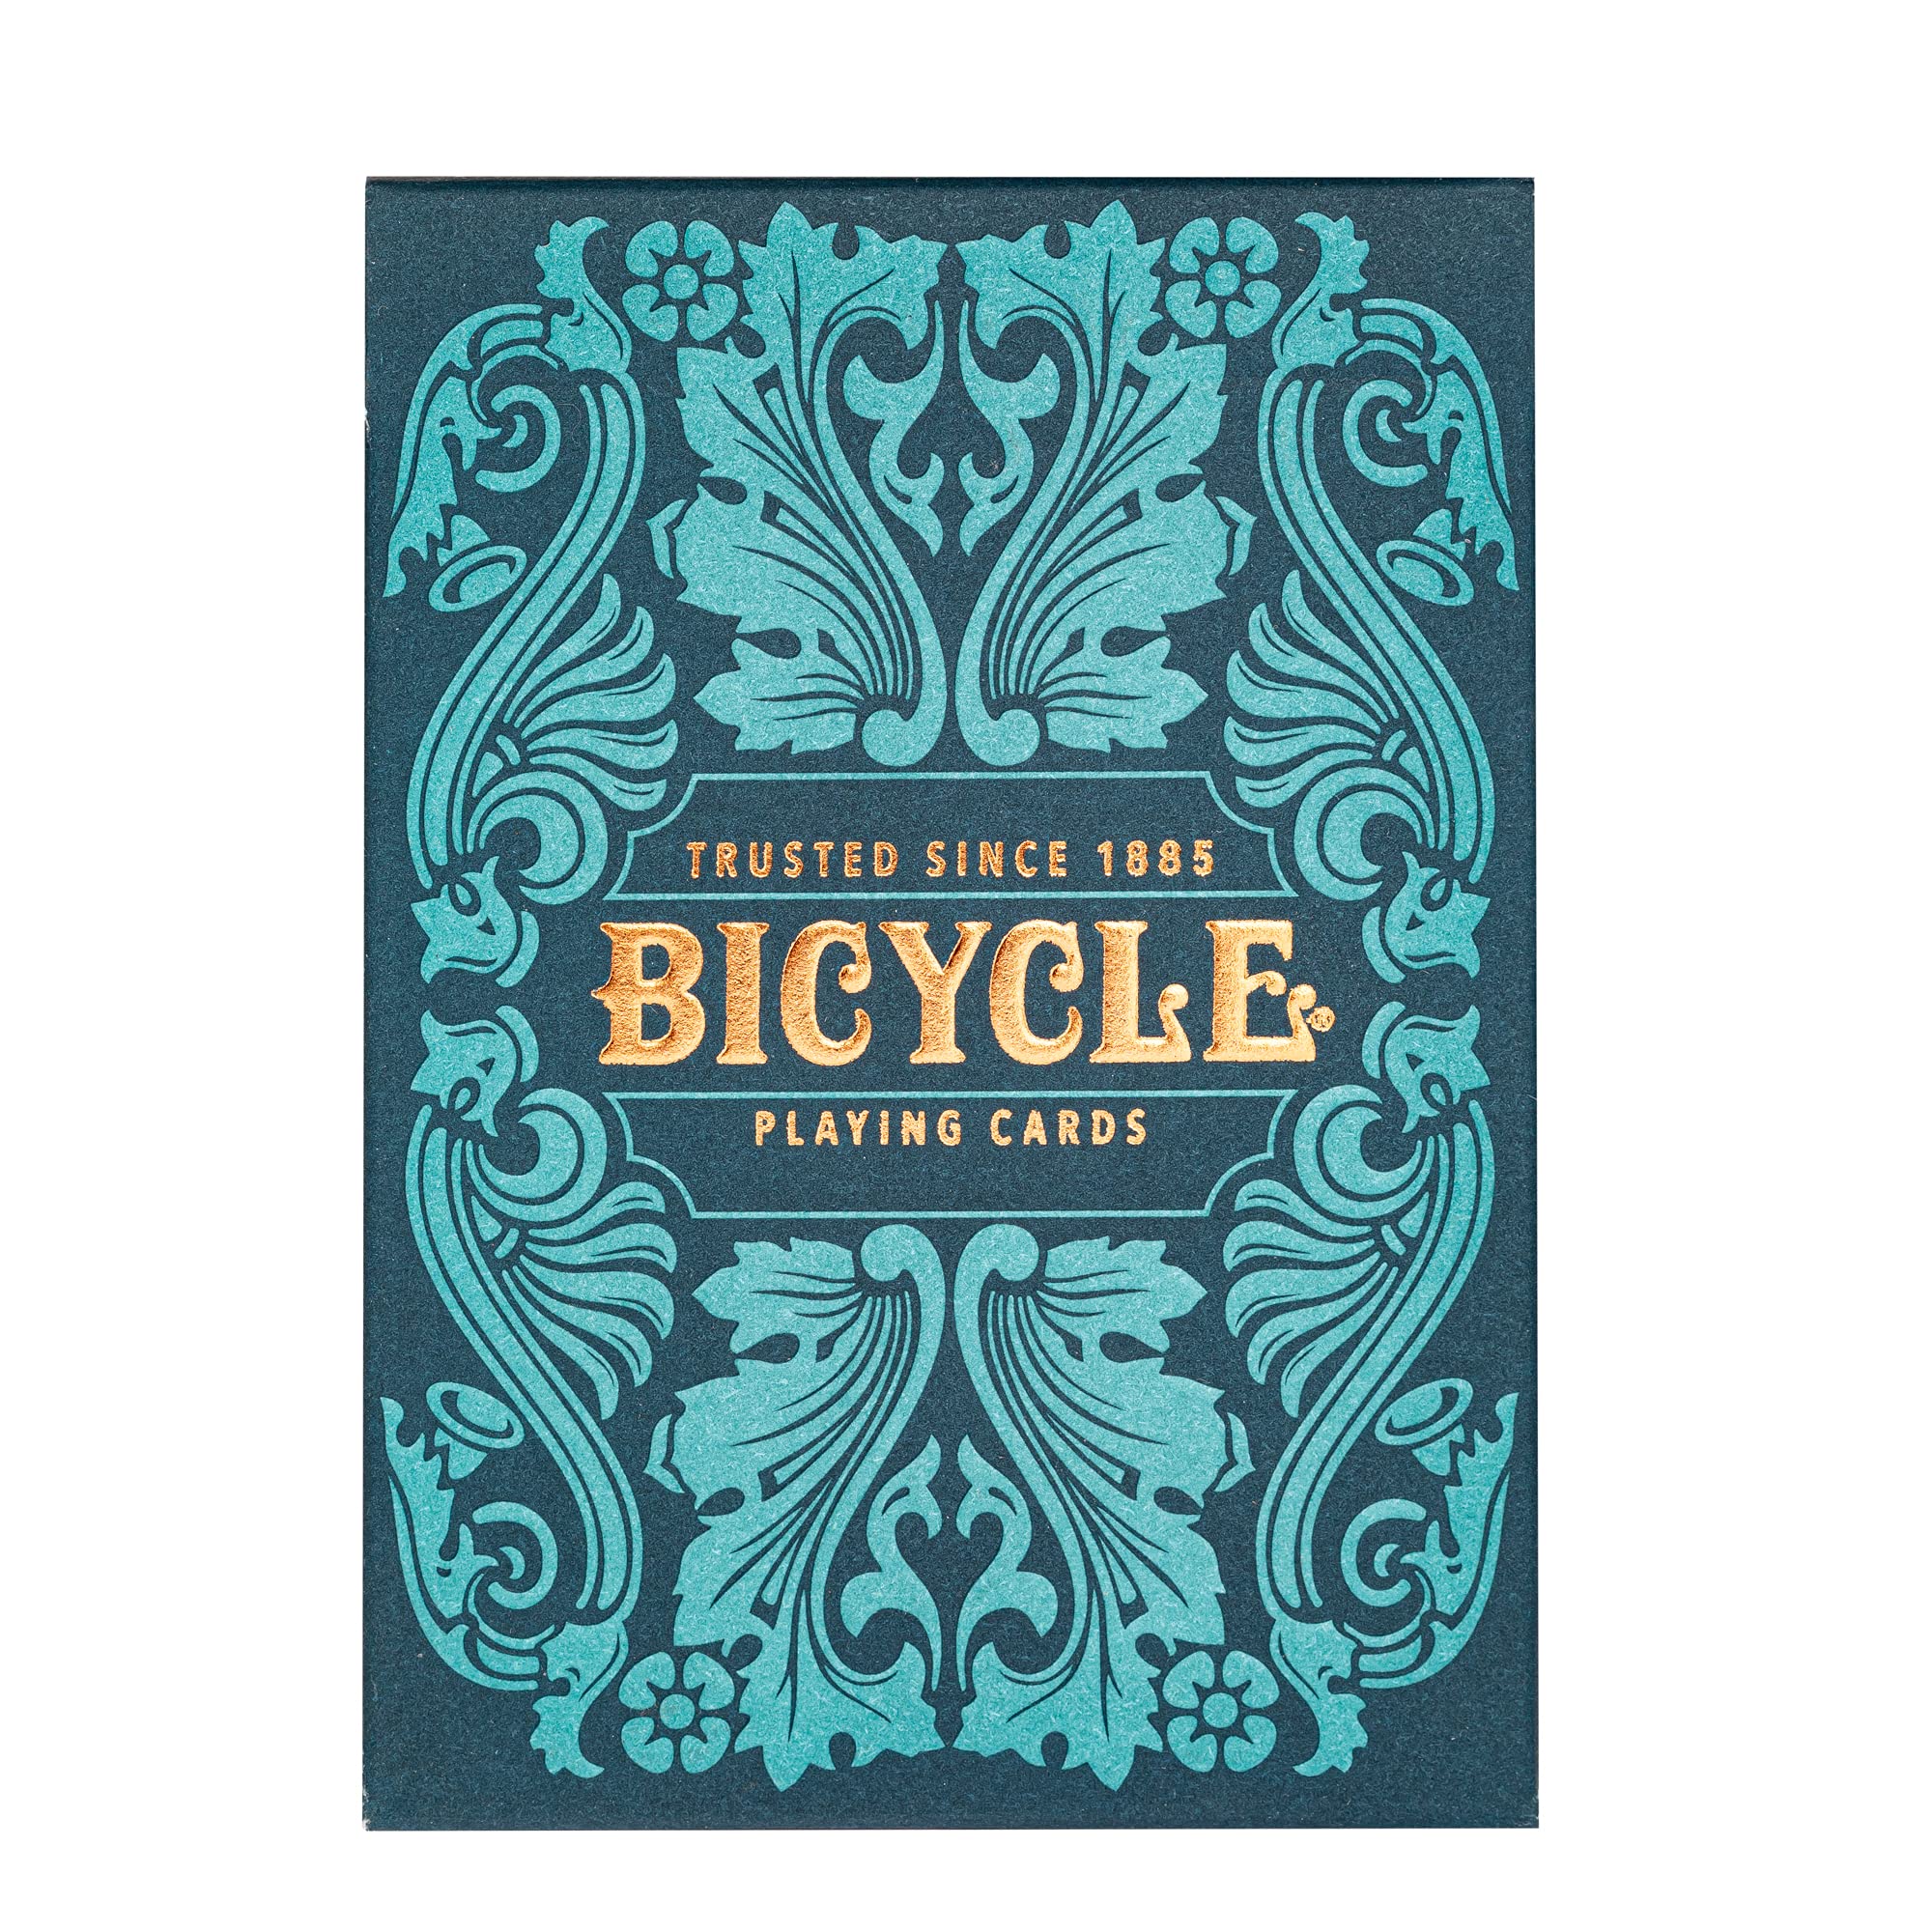 Bicycle Sea King Premium Playing Cards, 1 Deck